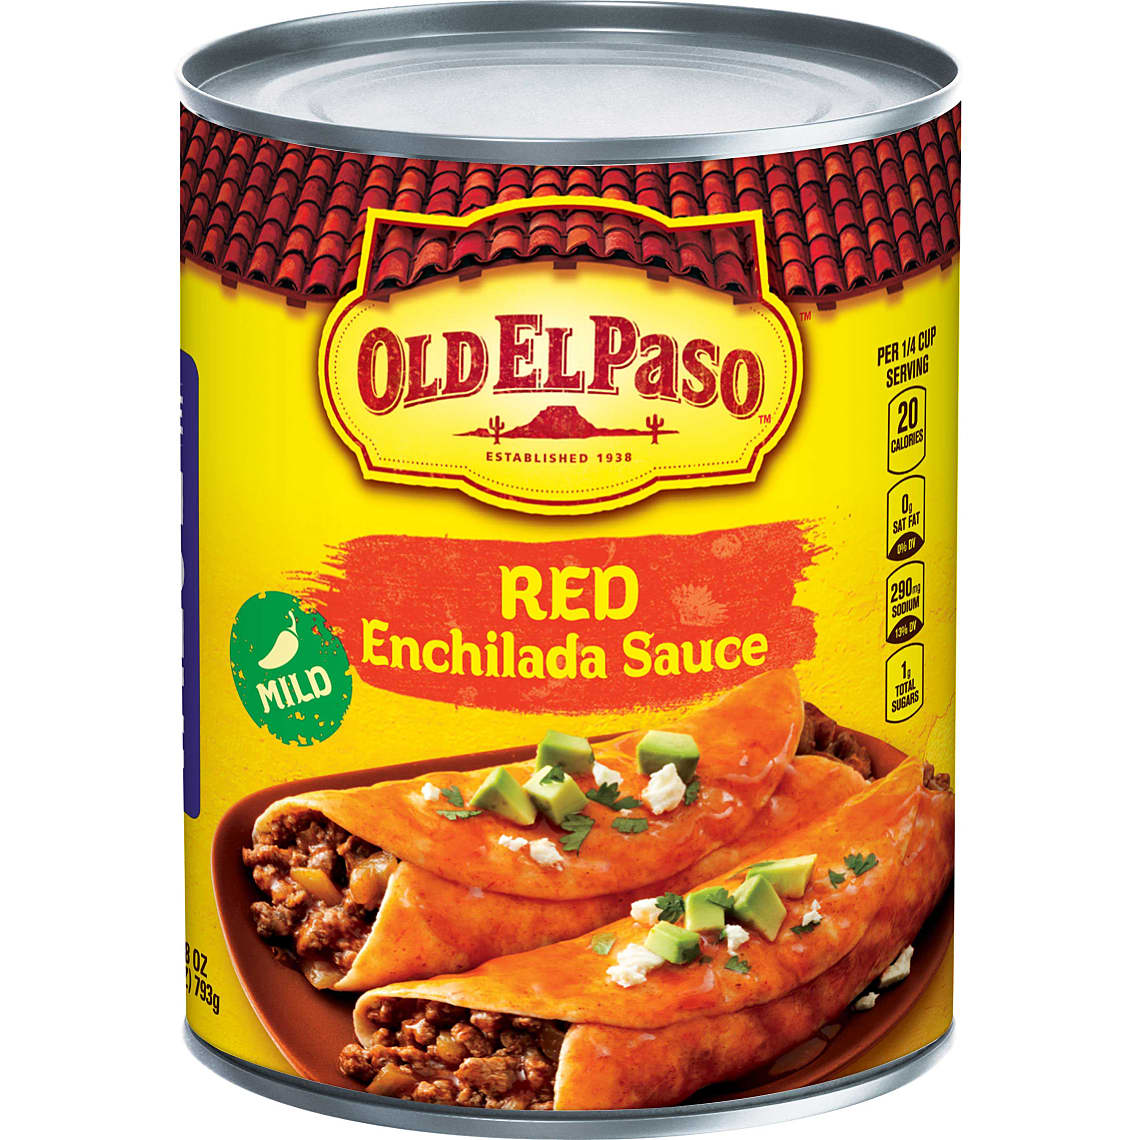 Old El Paso Enchilada Sauce, Mild, Red, 28 oz Can